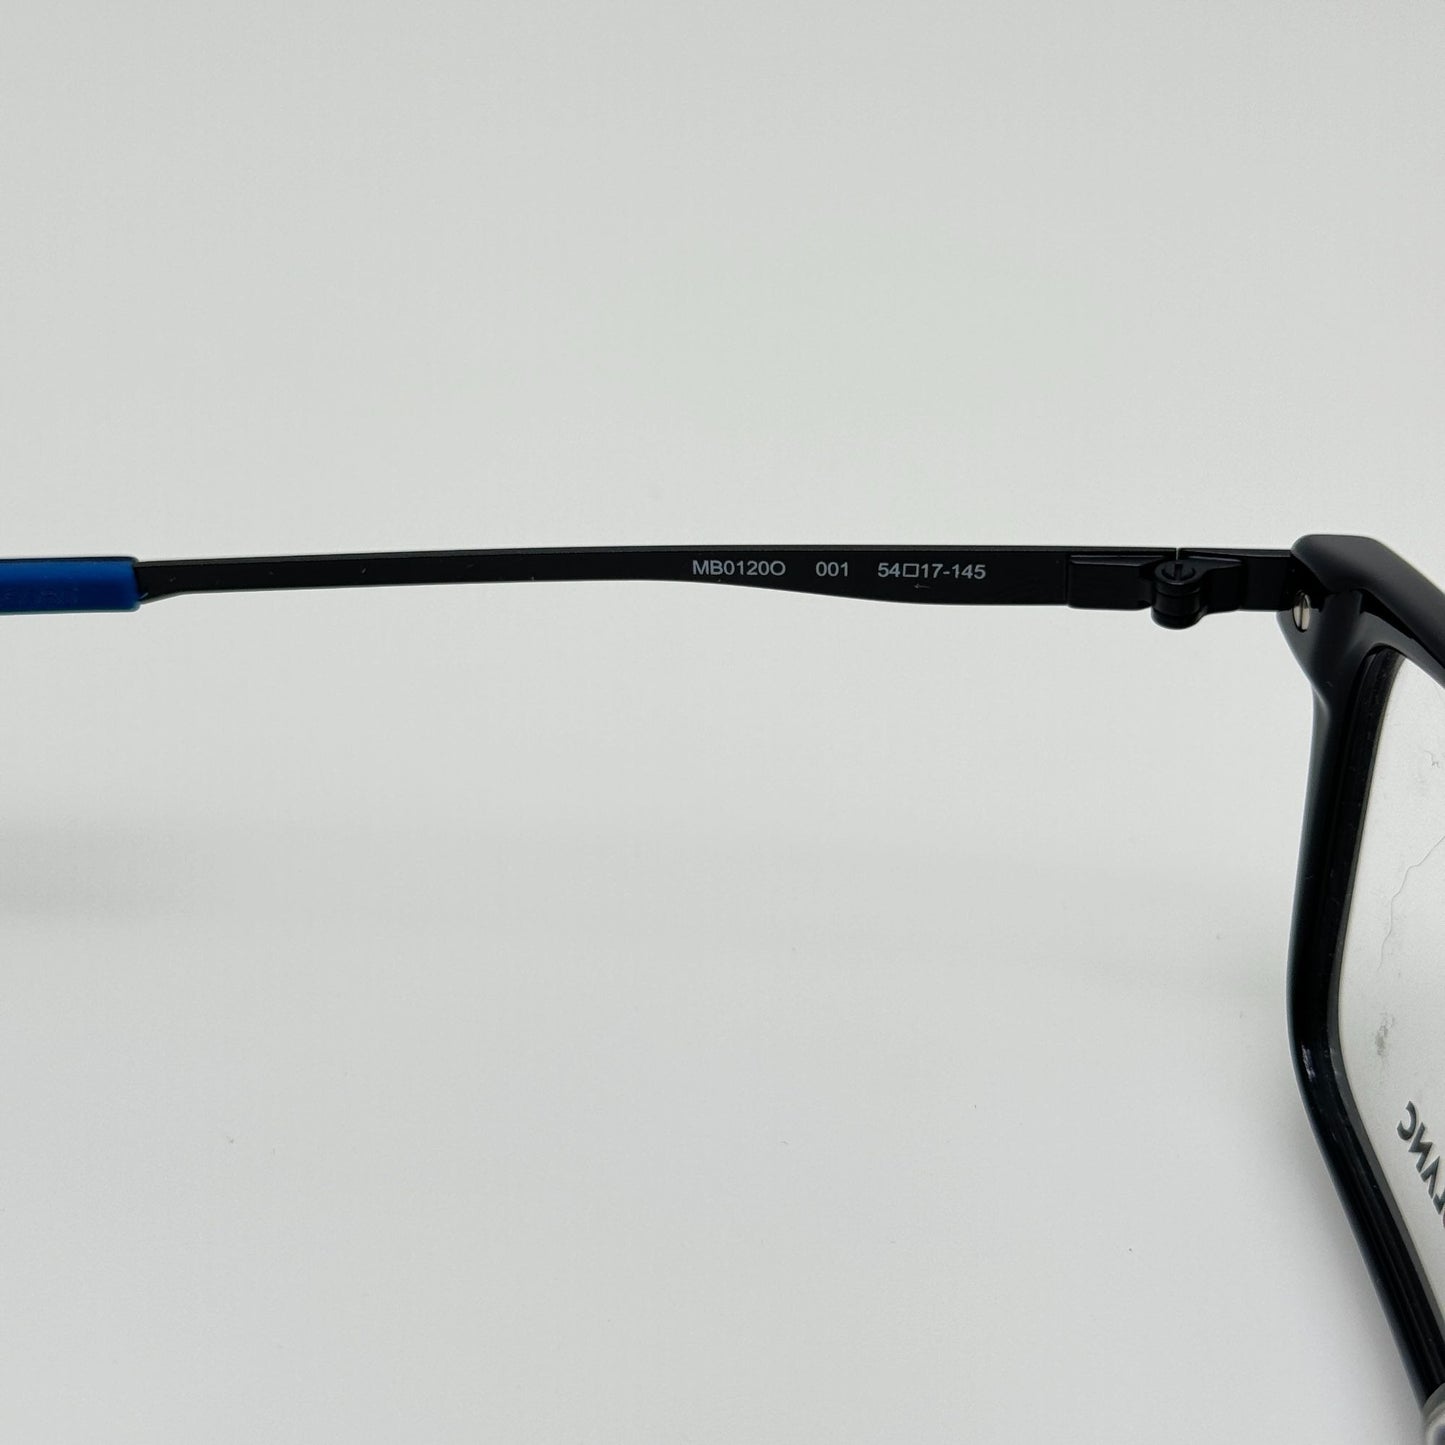 Montblanc Eyeglasses Eye Glasses Frames MB0120O 001 54-17-145